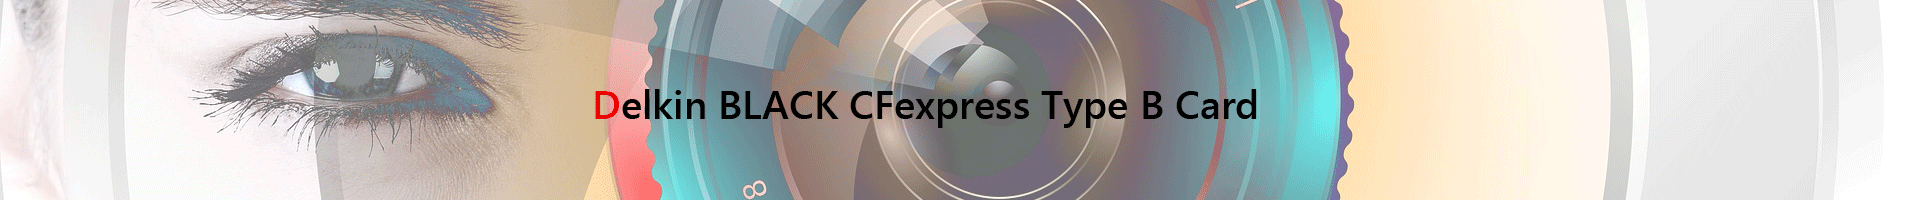  Delkin BLACK CFexpress Type Bカードの特徴